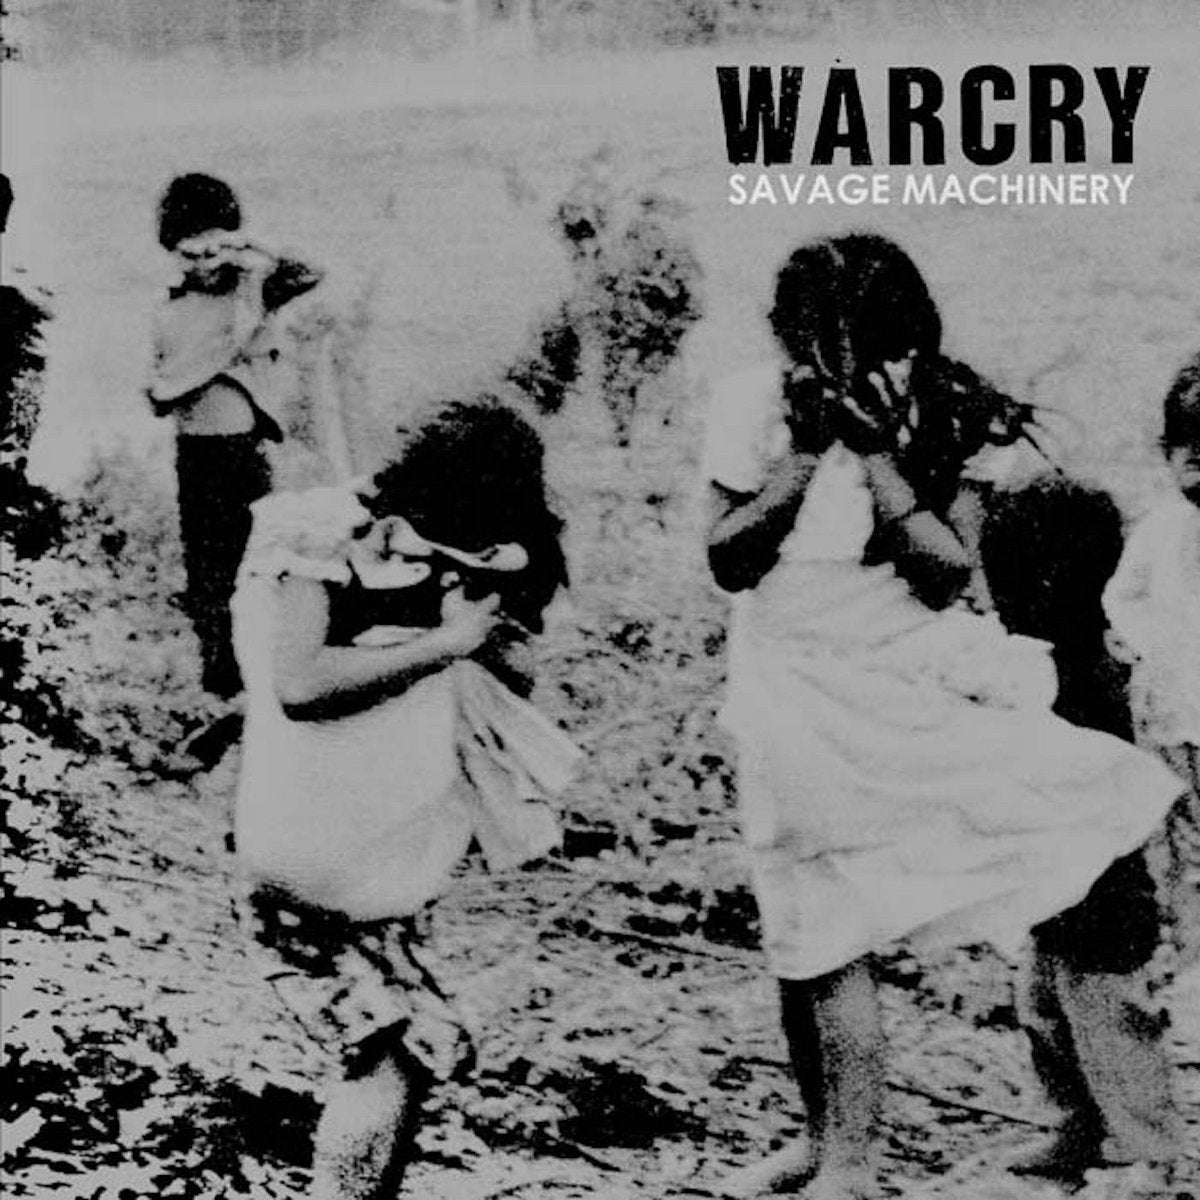 Warcry - "Savage Machinery" LP